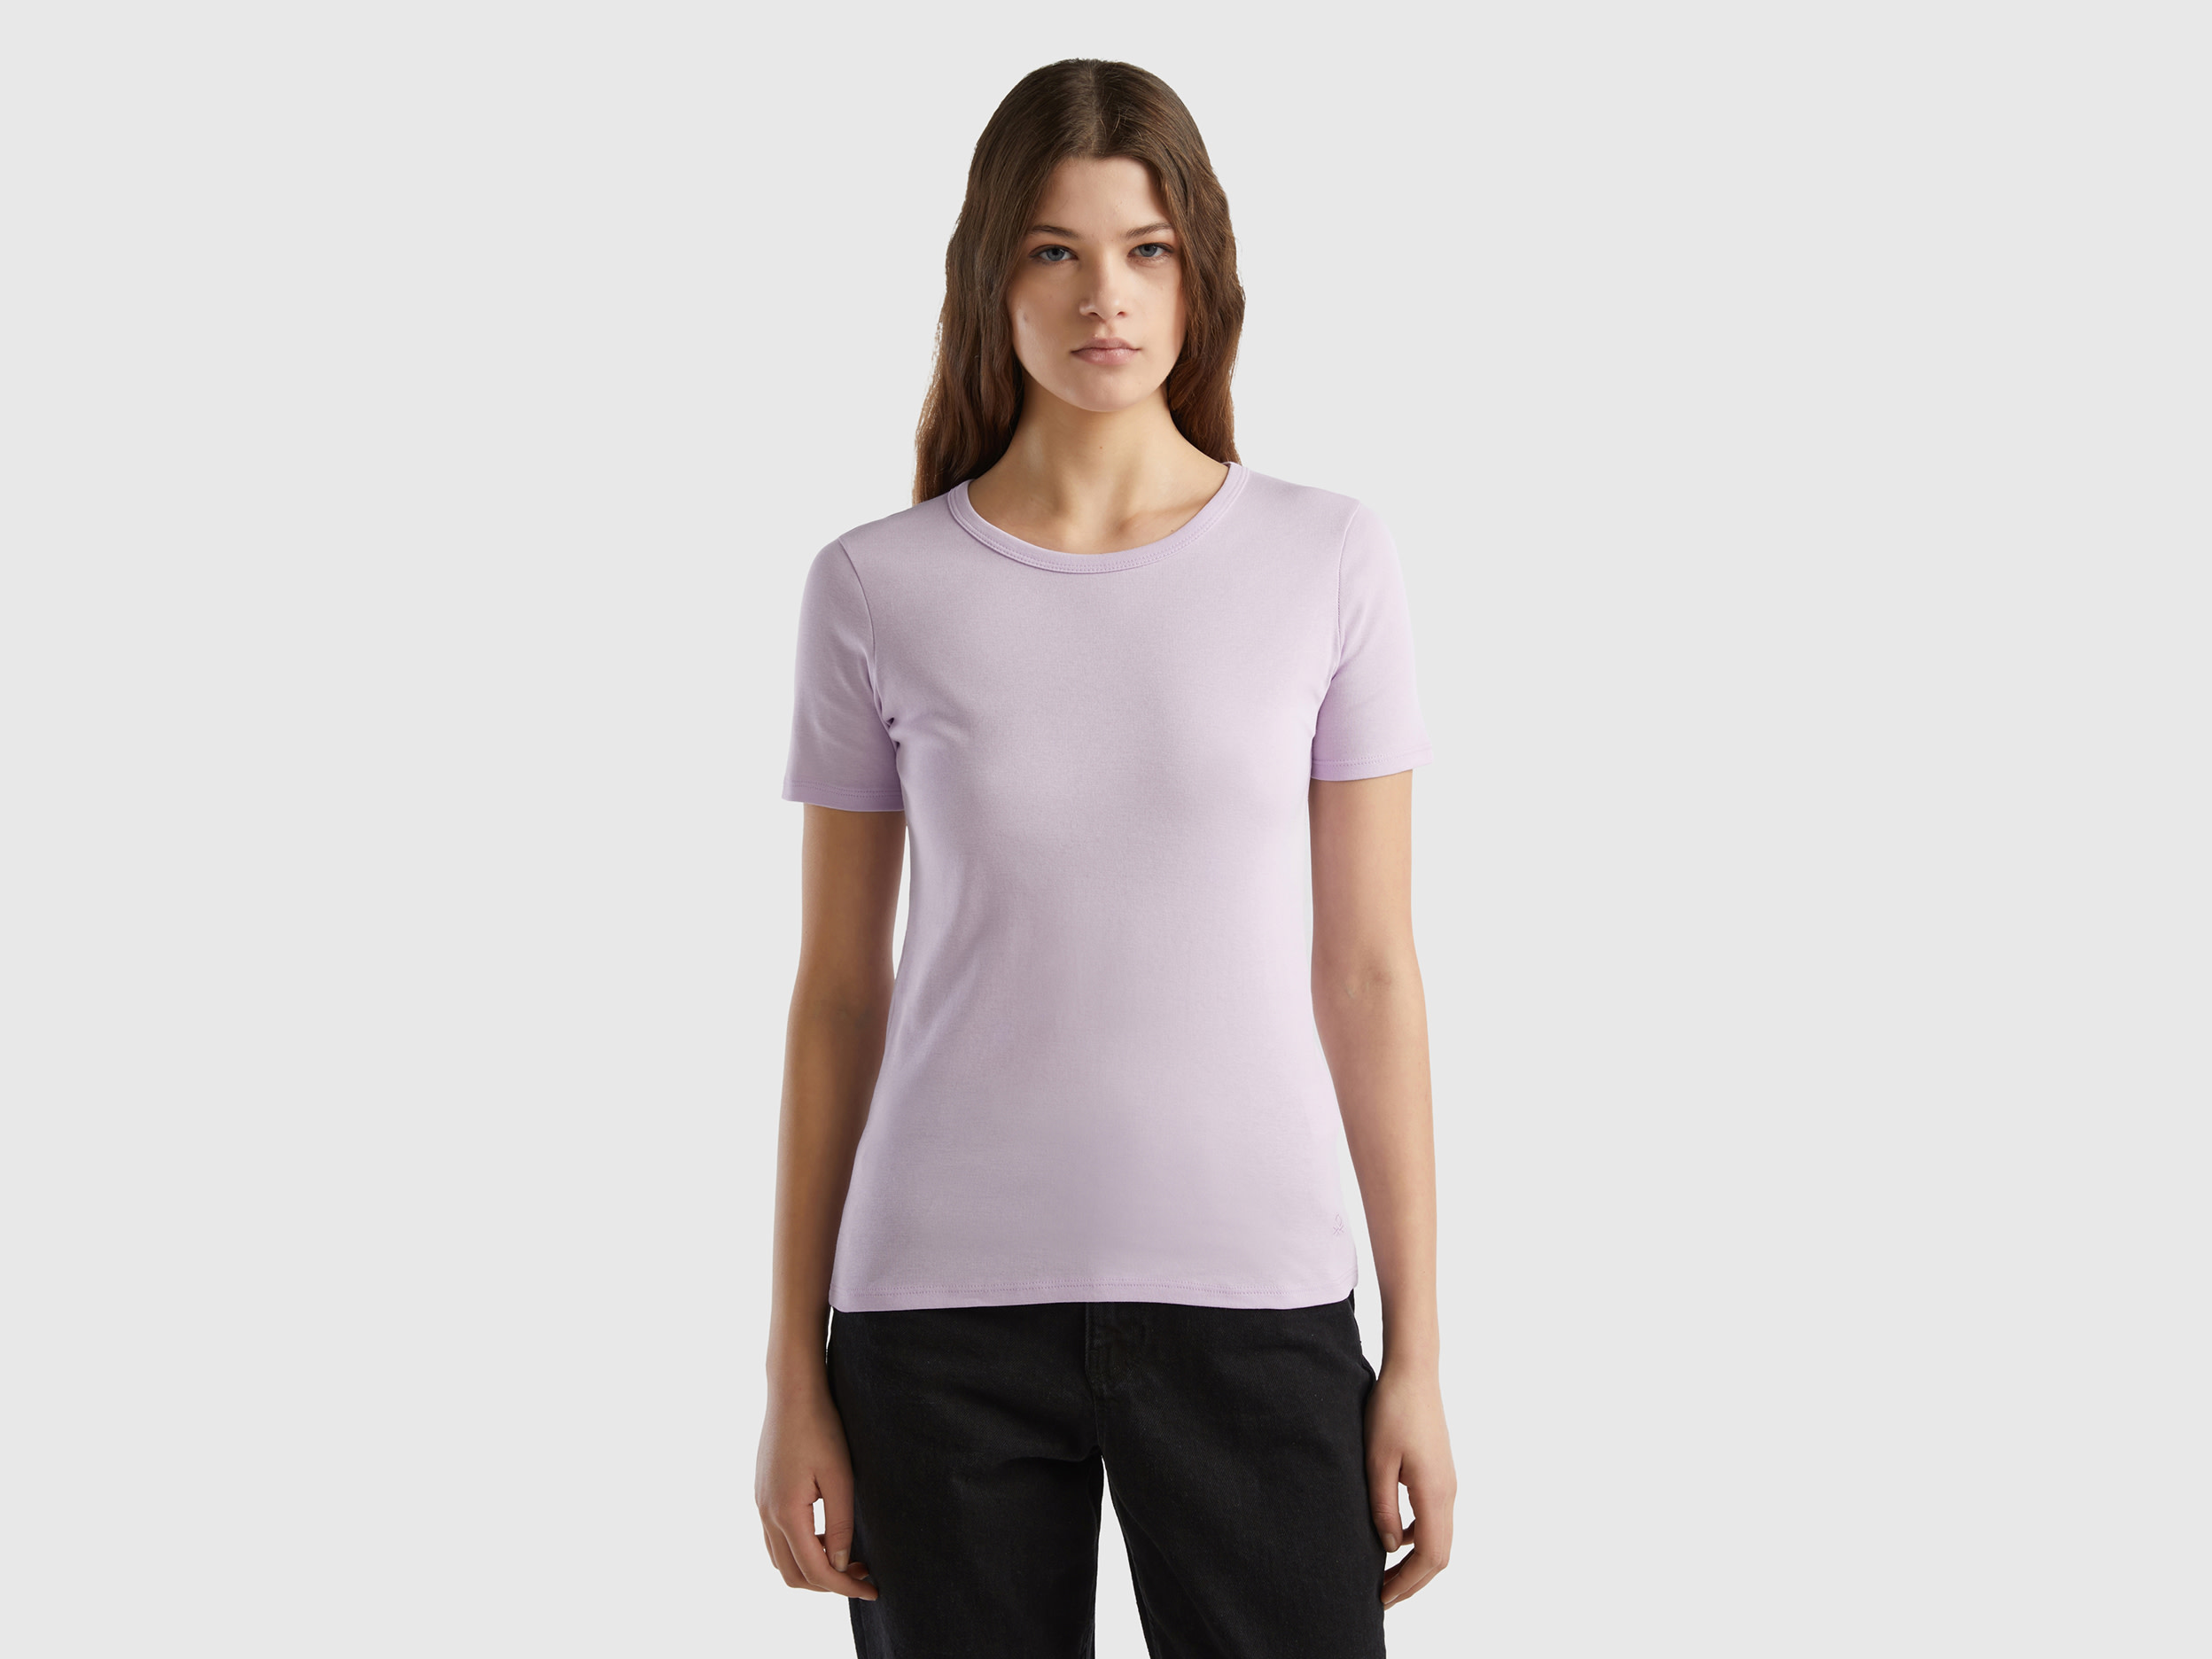 Benetton, Long Fiber Cotton T-shirt, size S, Lilac, Women